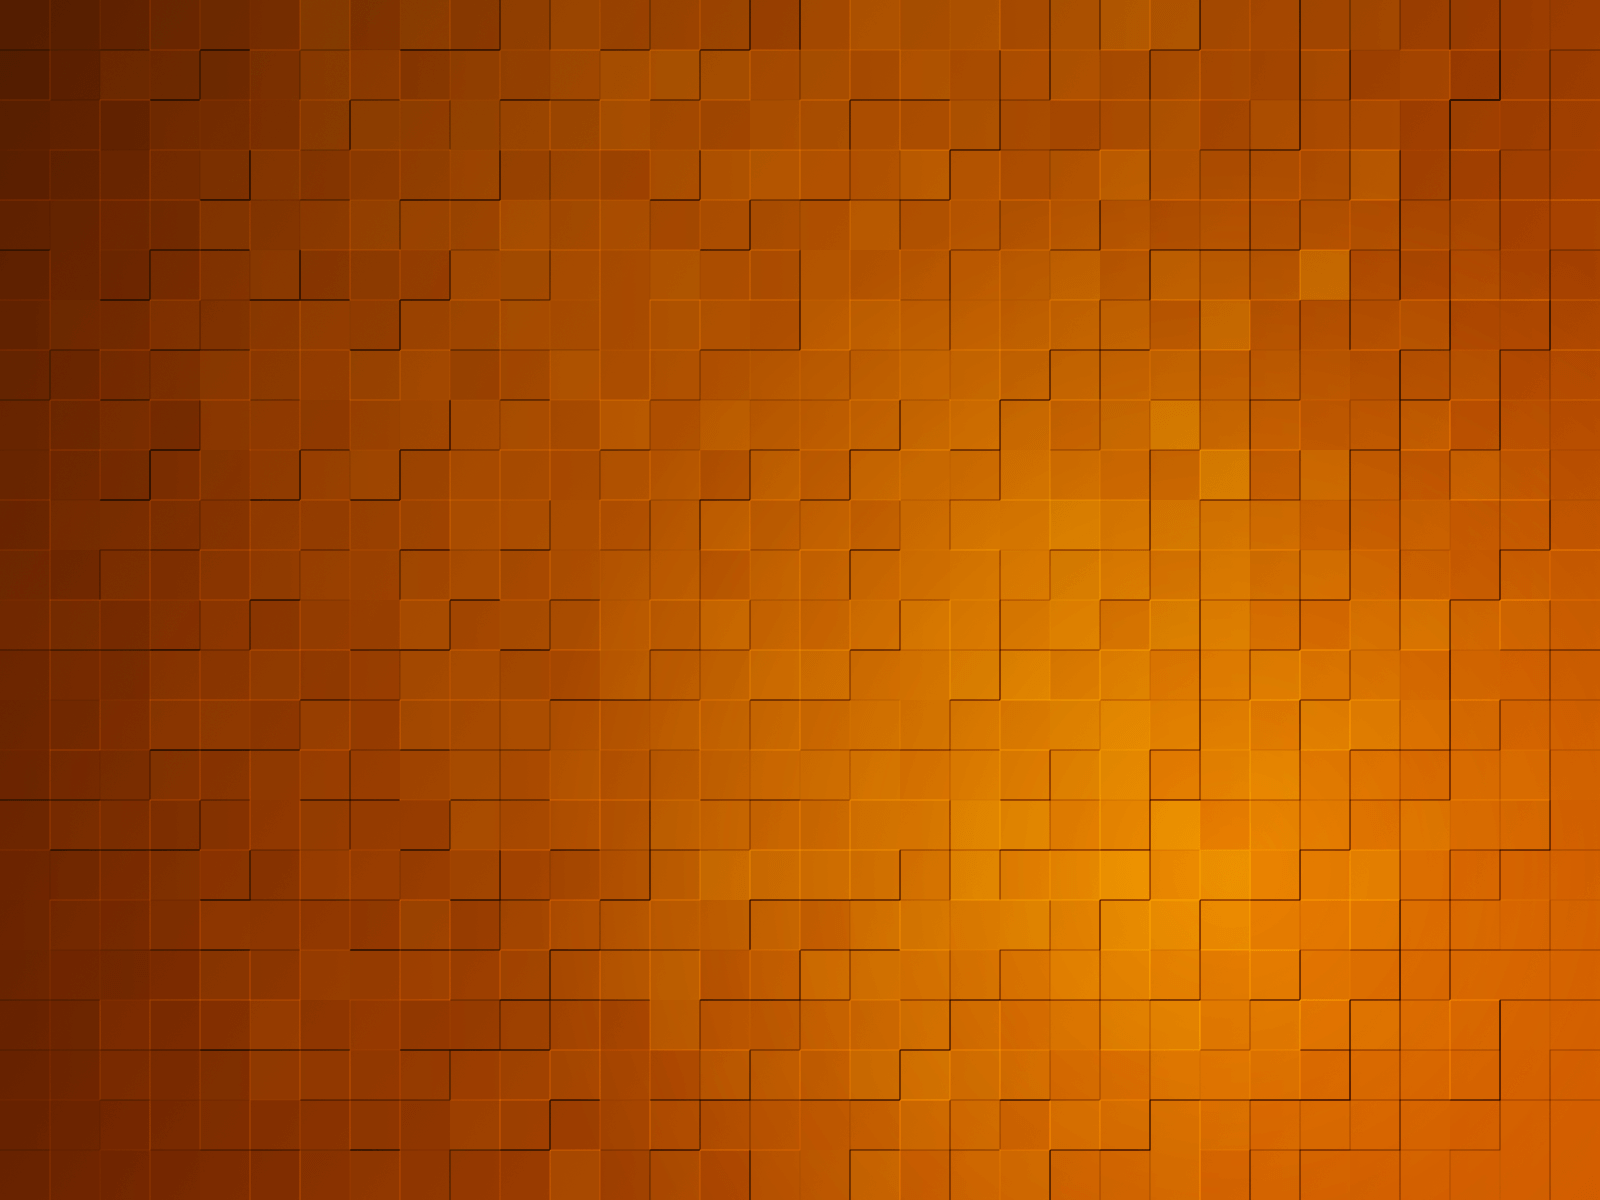 Orange Background HQ Desktop Wallpaper 16462